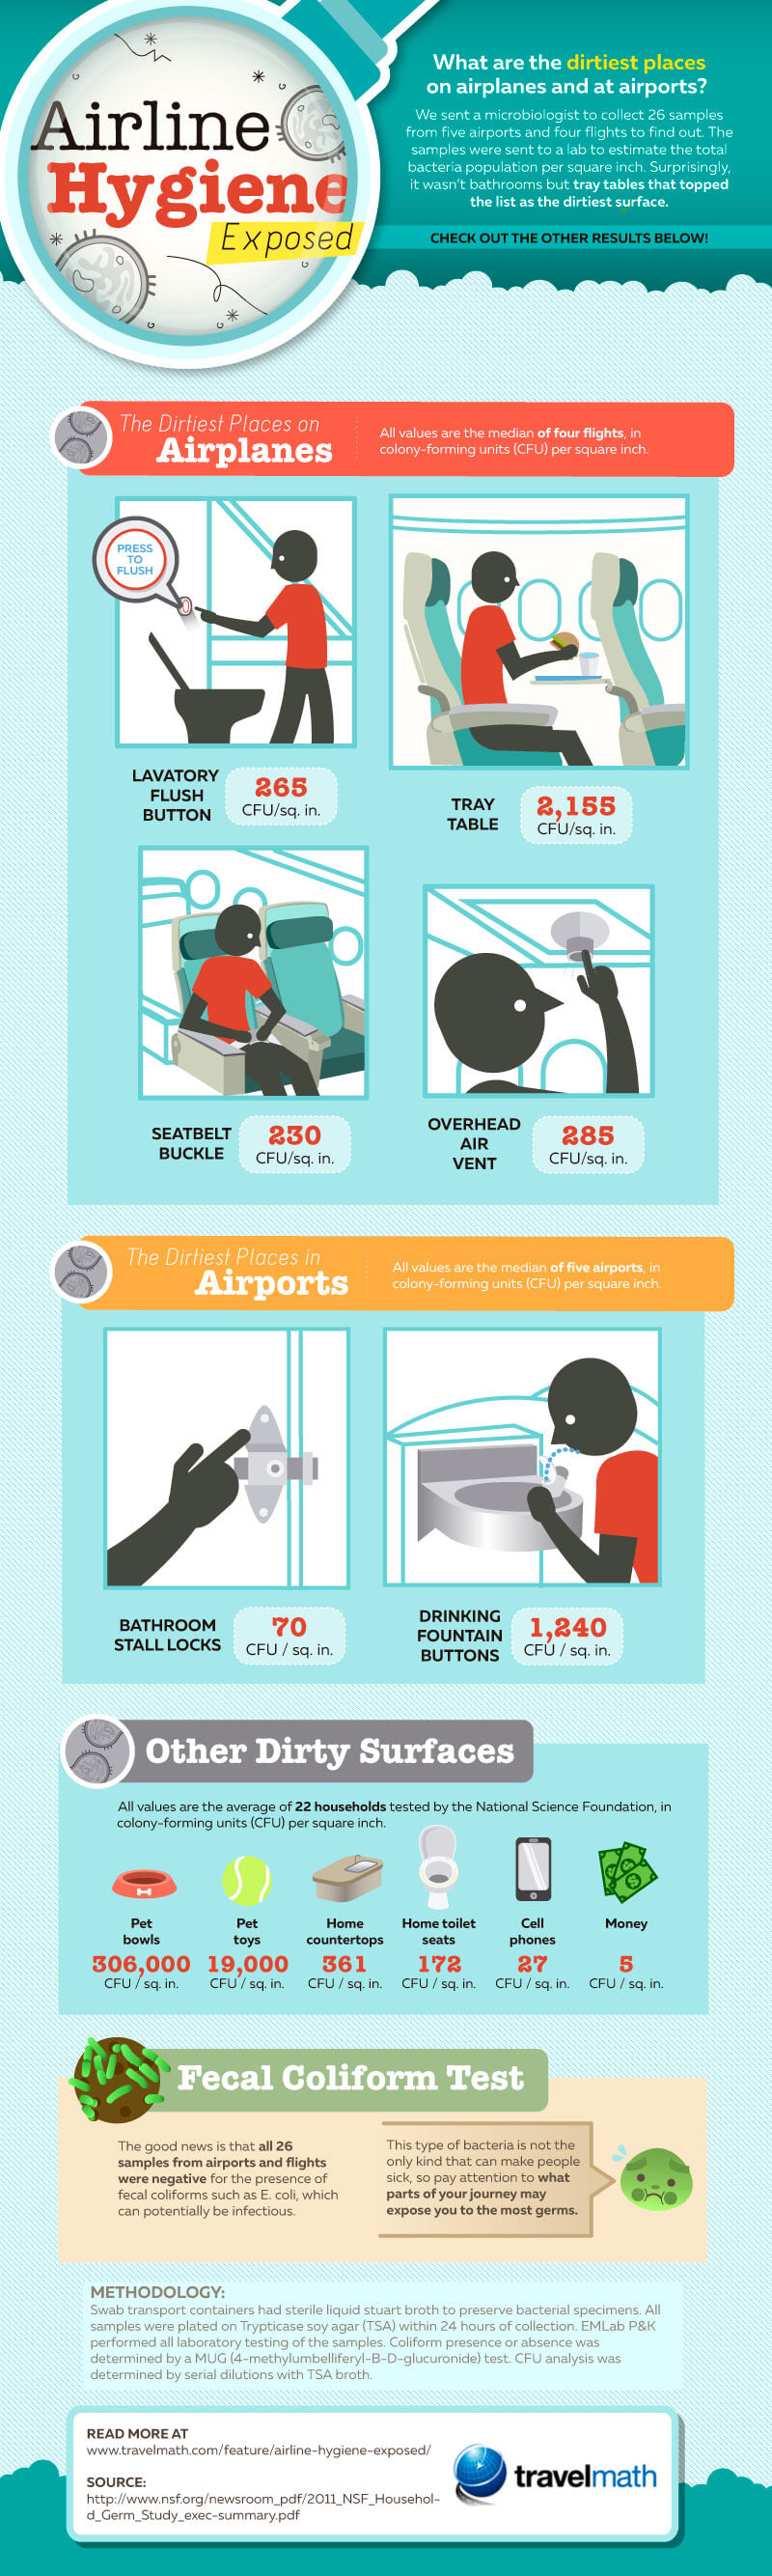 travelmath-airline-hygiene-exposed